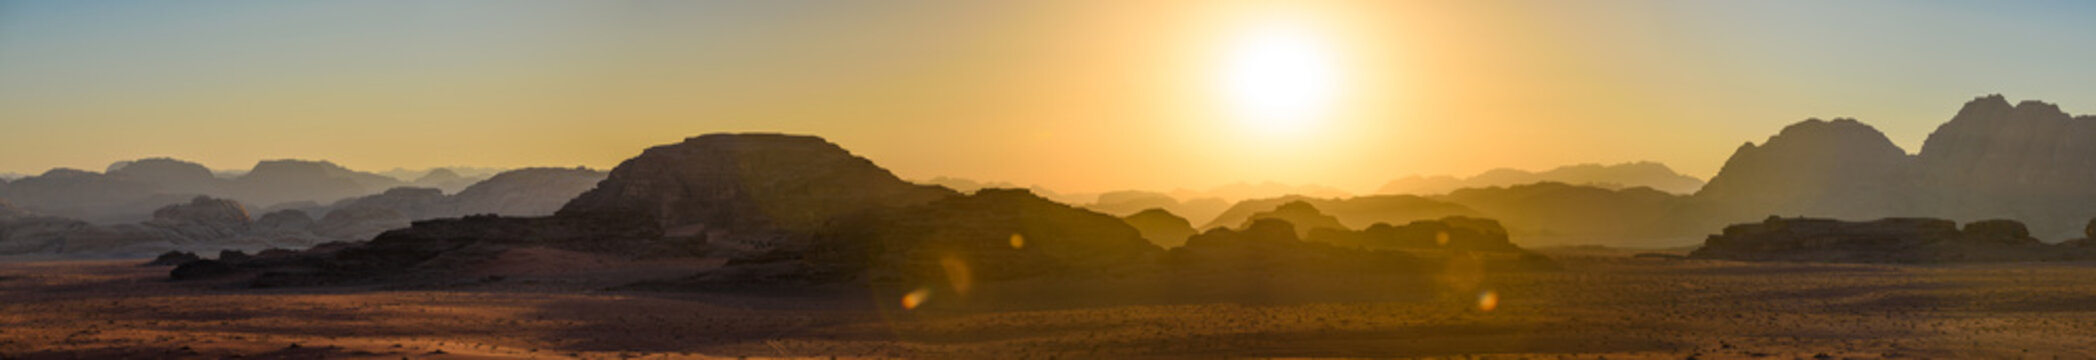 Panorama of Wadi Rum at sunset